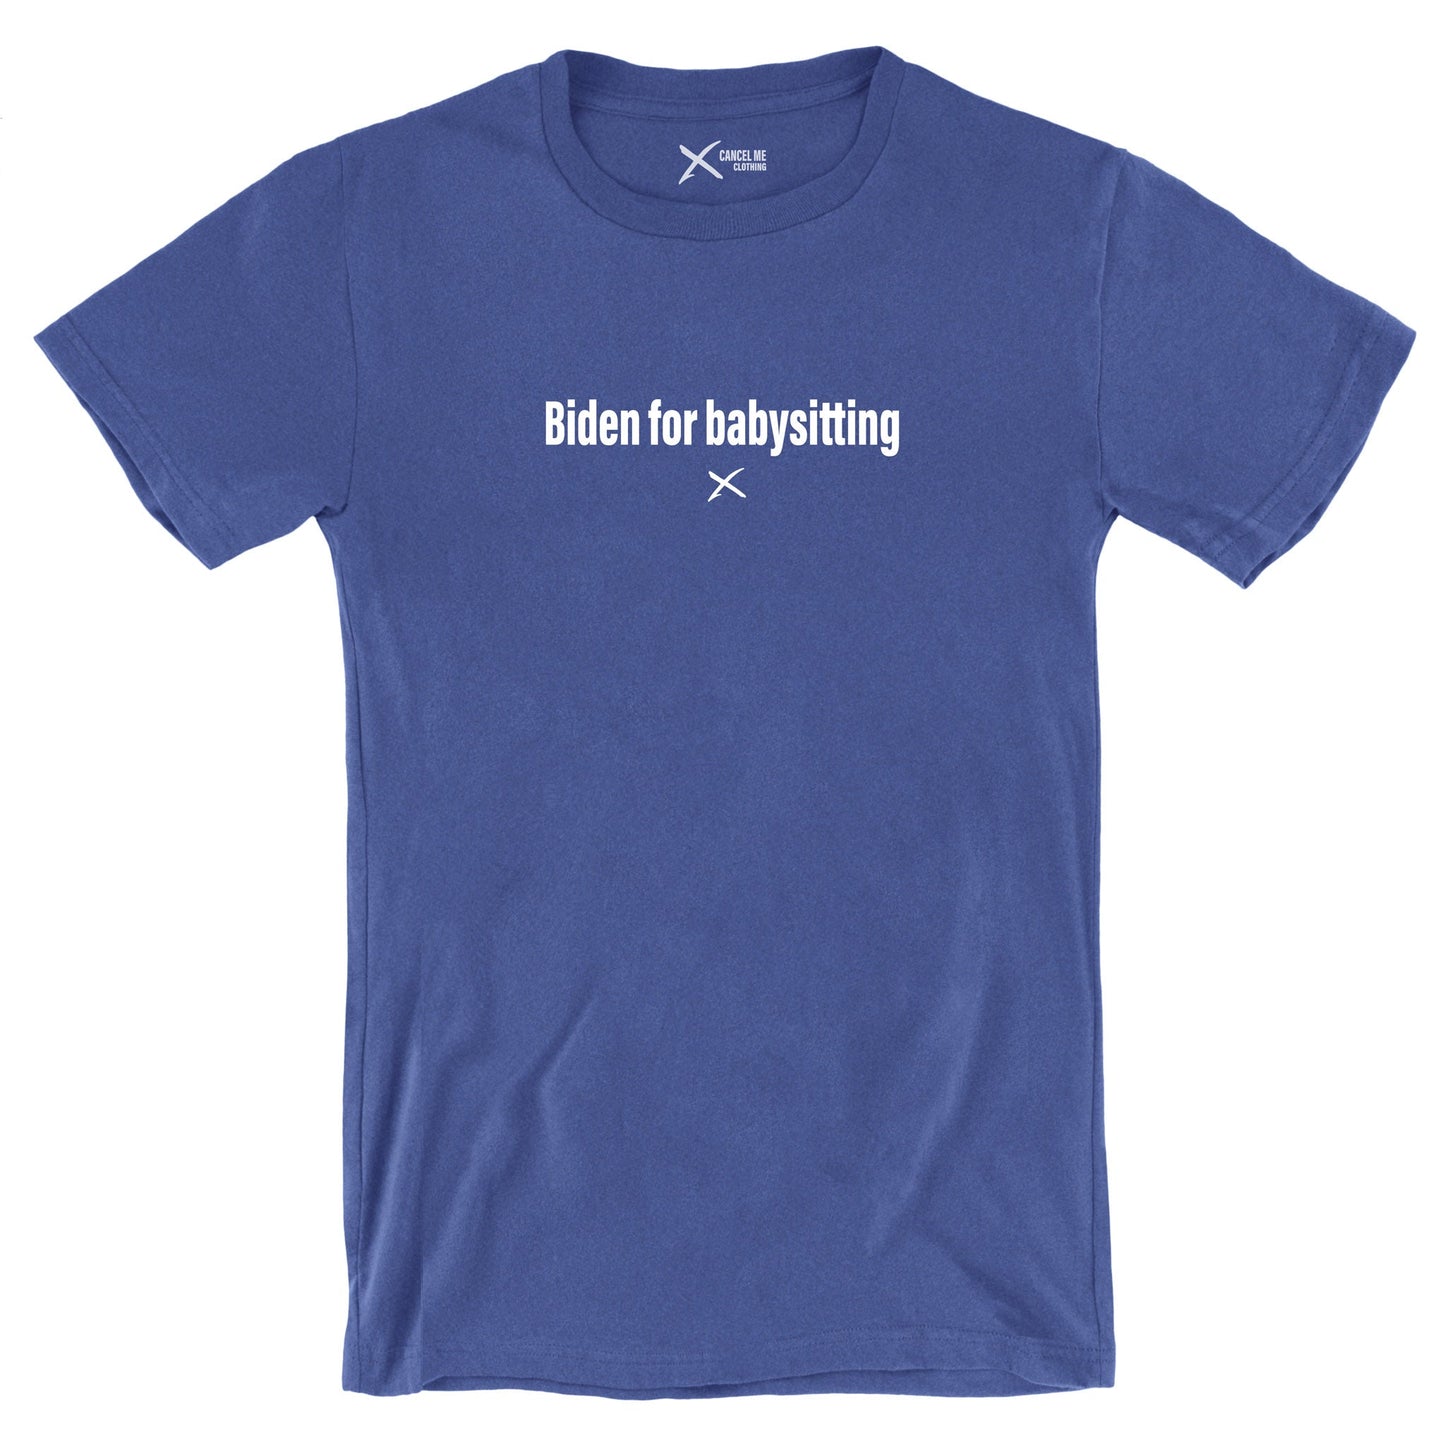 Biden for babysitting - Shirt